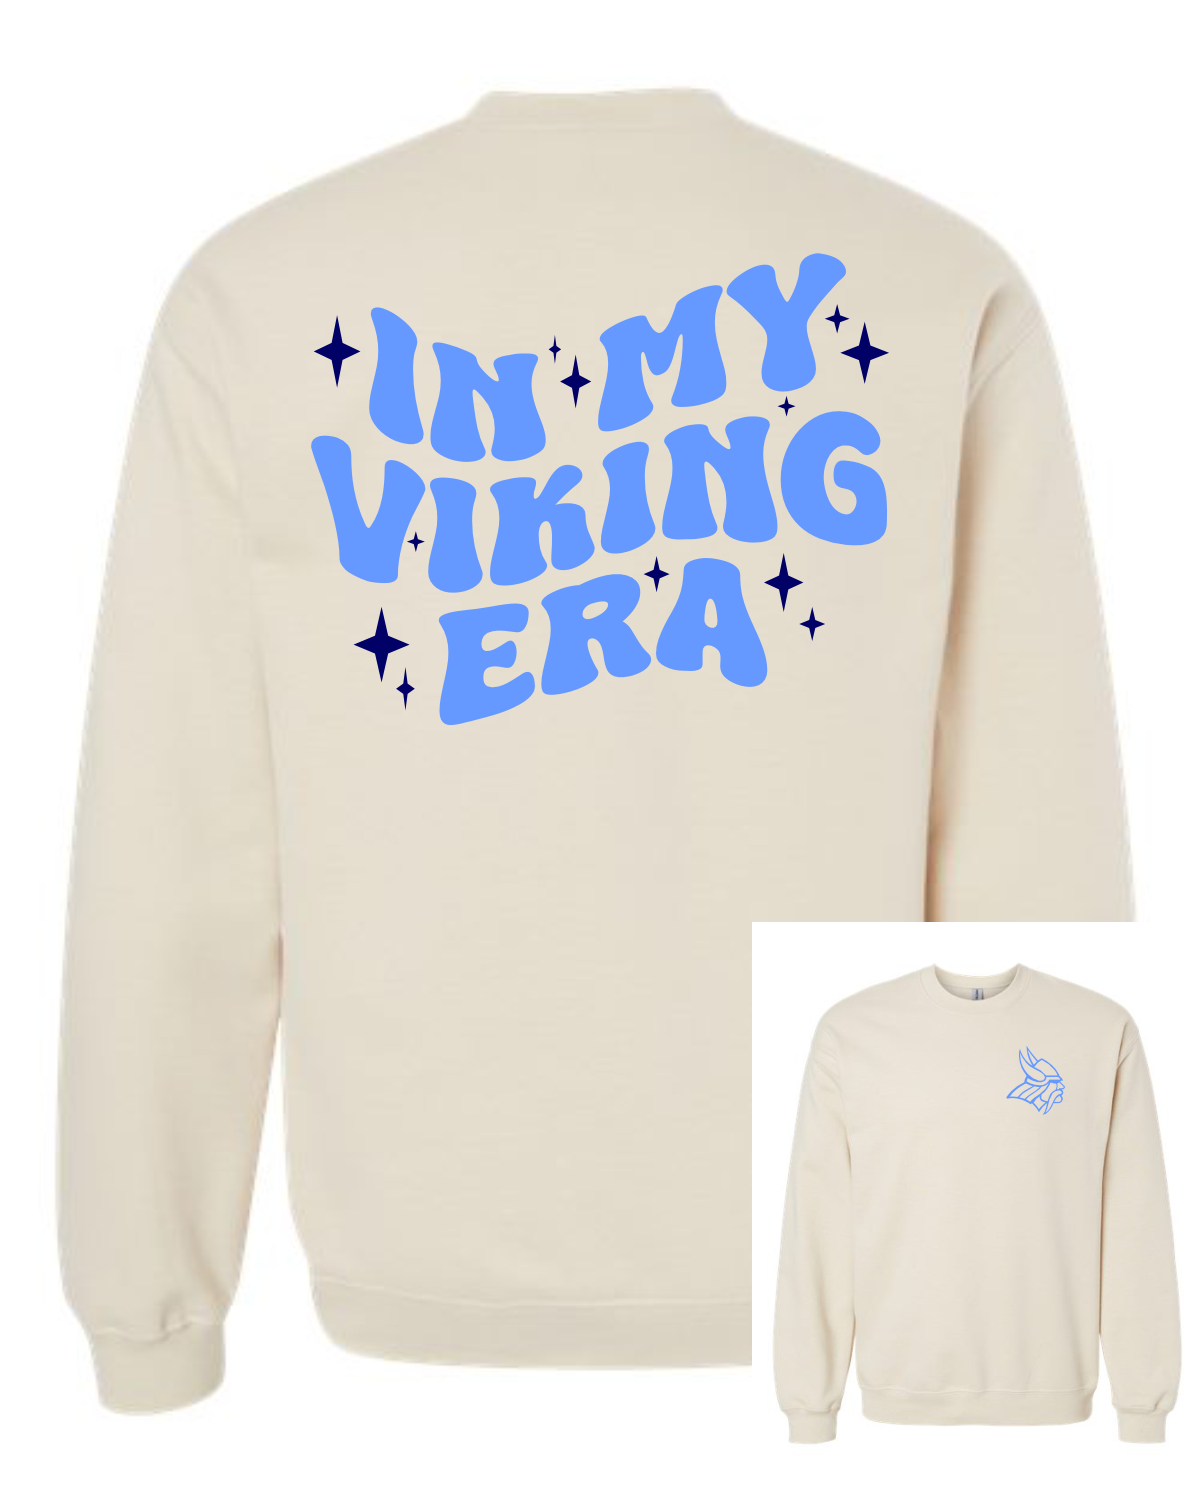 Vikings Era Softstyle® Crewneck Sweatshirt